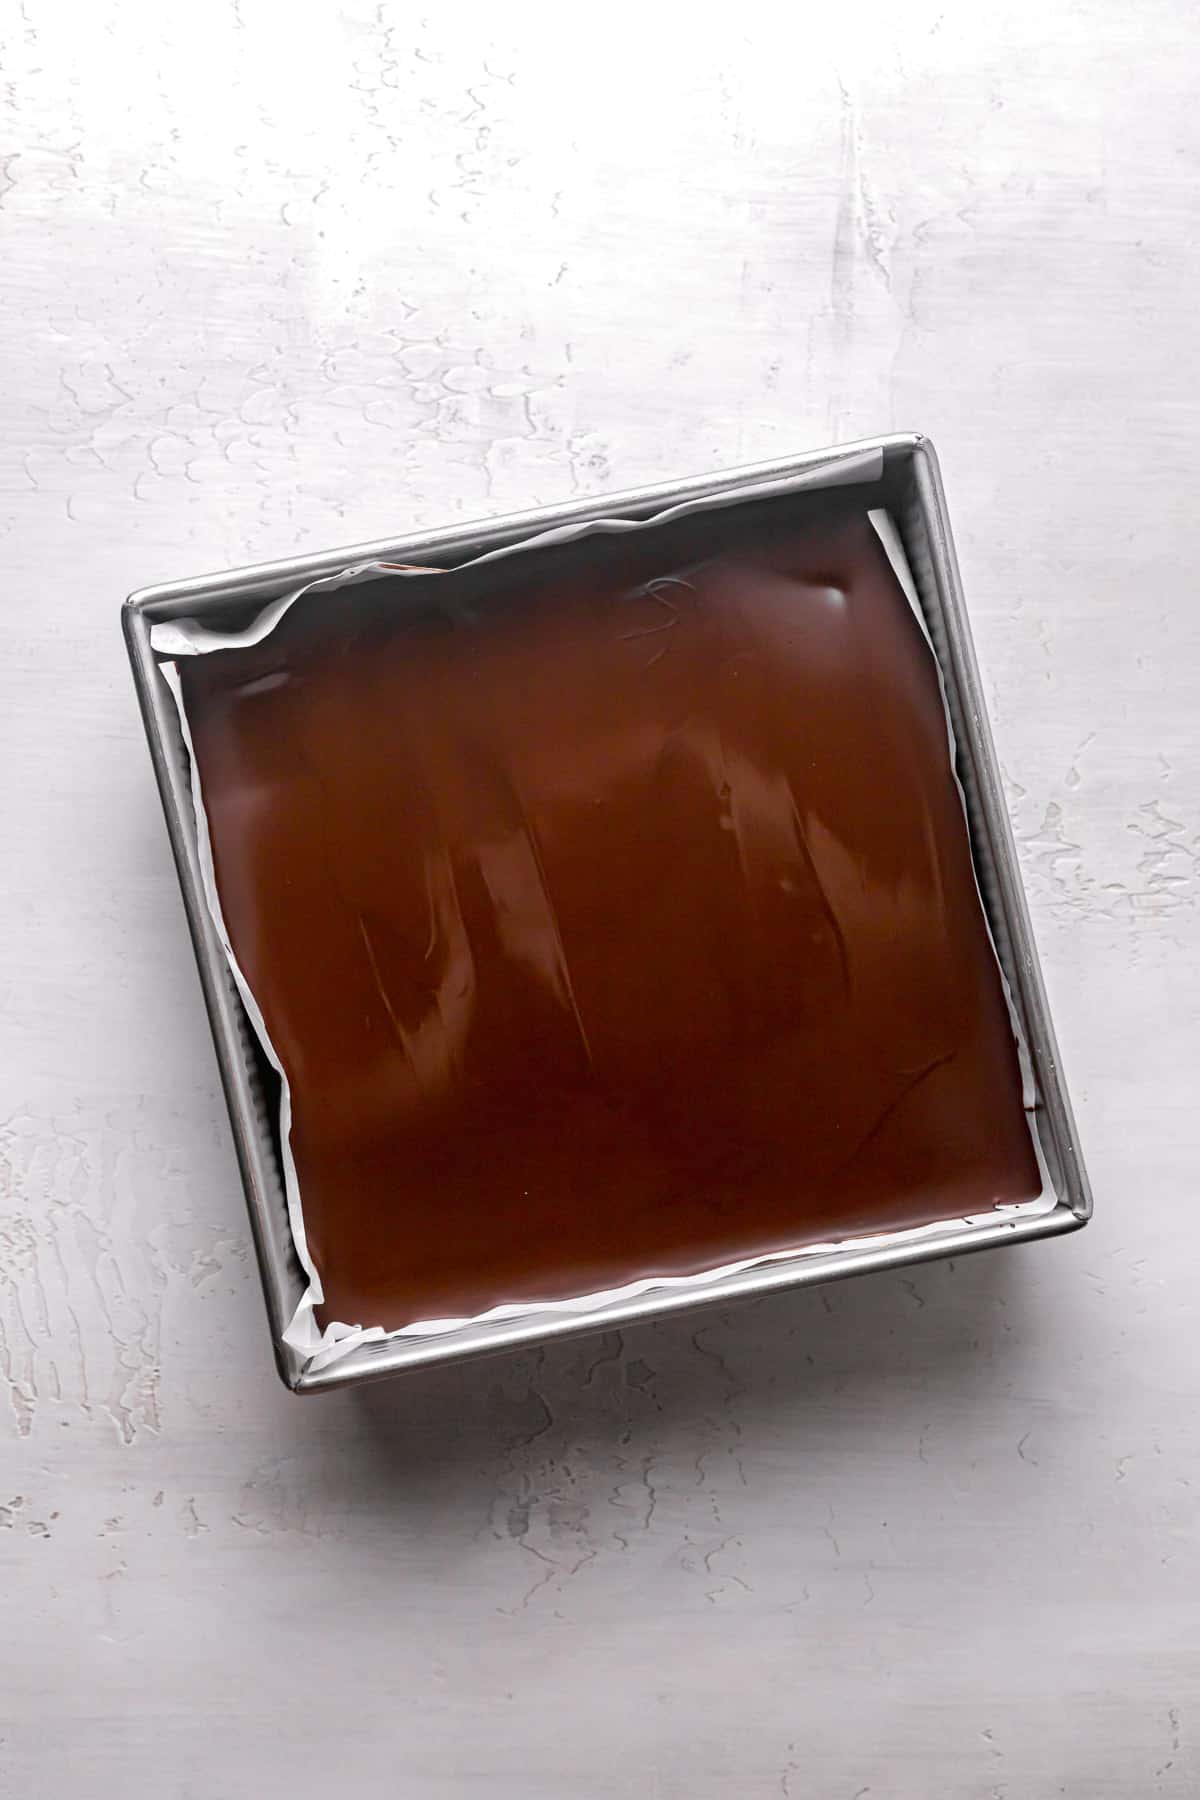 chocolate added on top of tahini caramel.